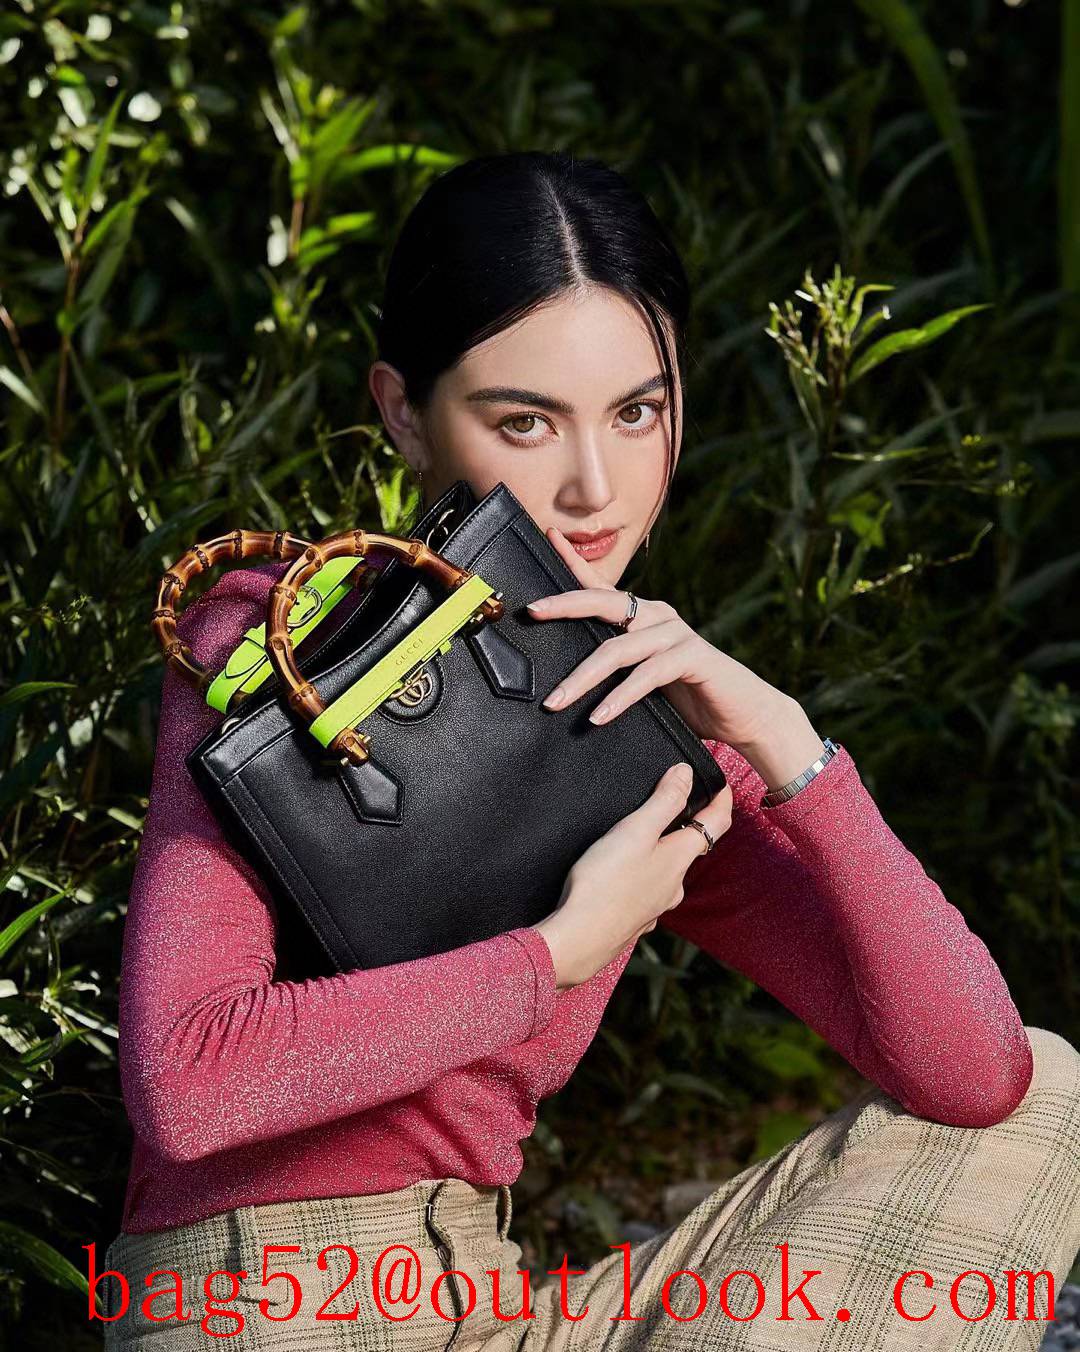 Gucci Diana Bamboo Medium women's dark green handbag